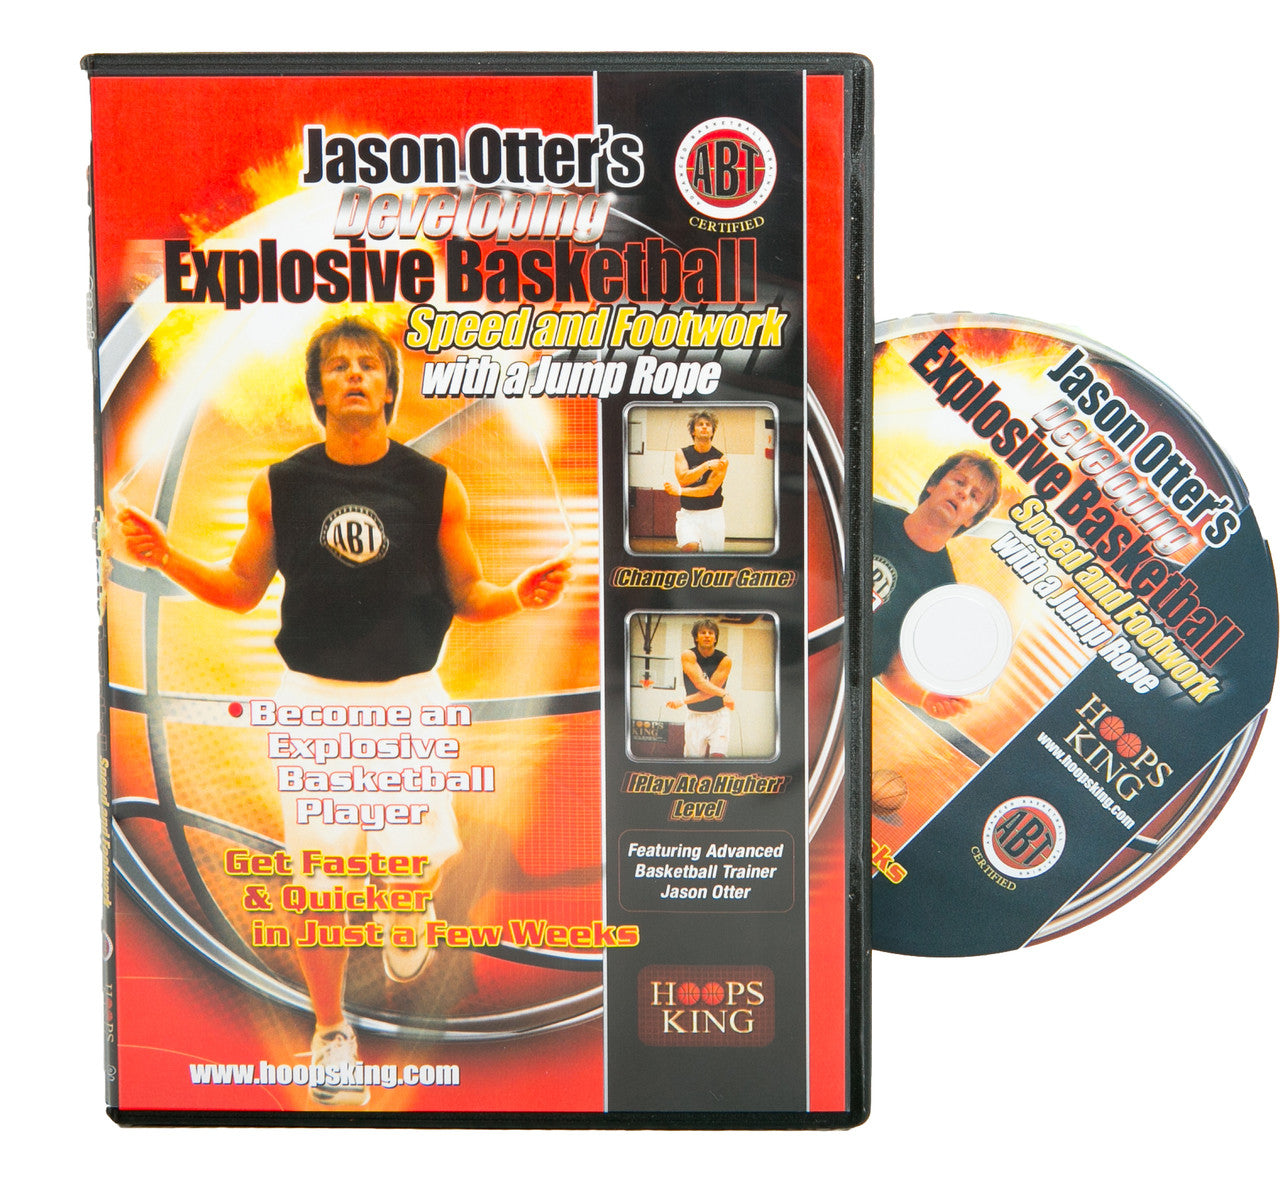 Jason Otter's Basketball jump rope and workout program.